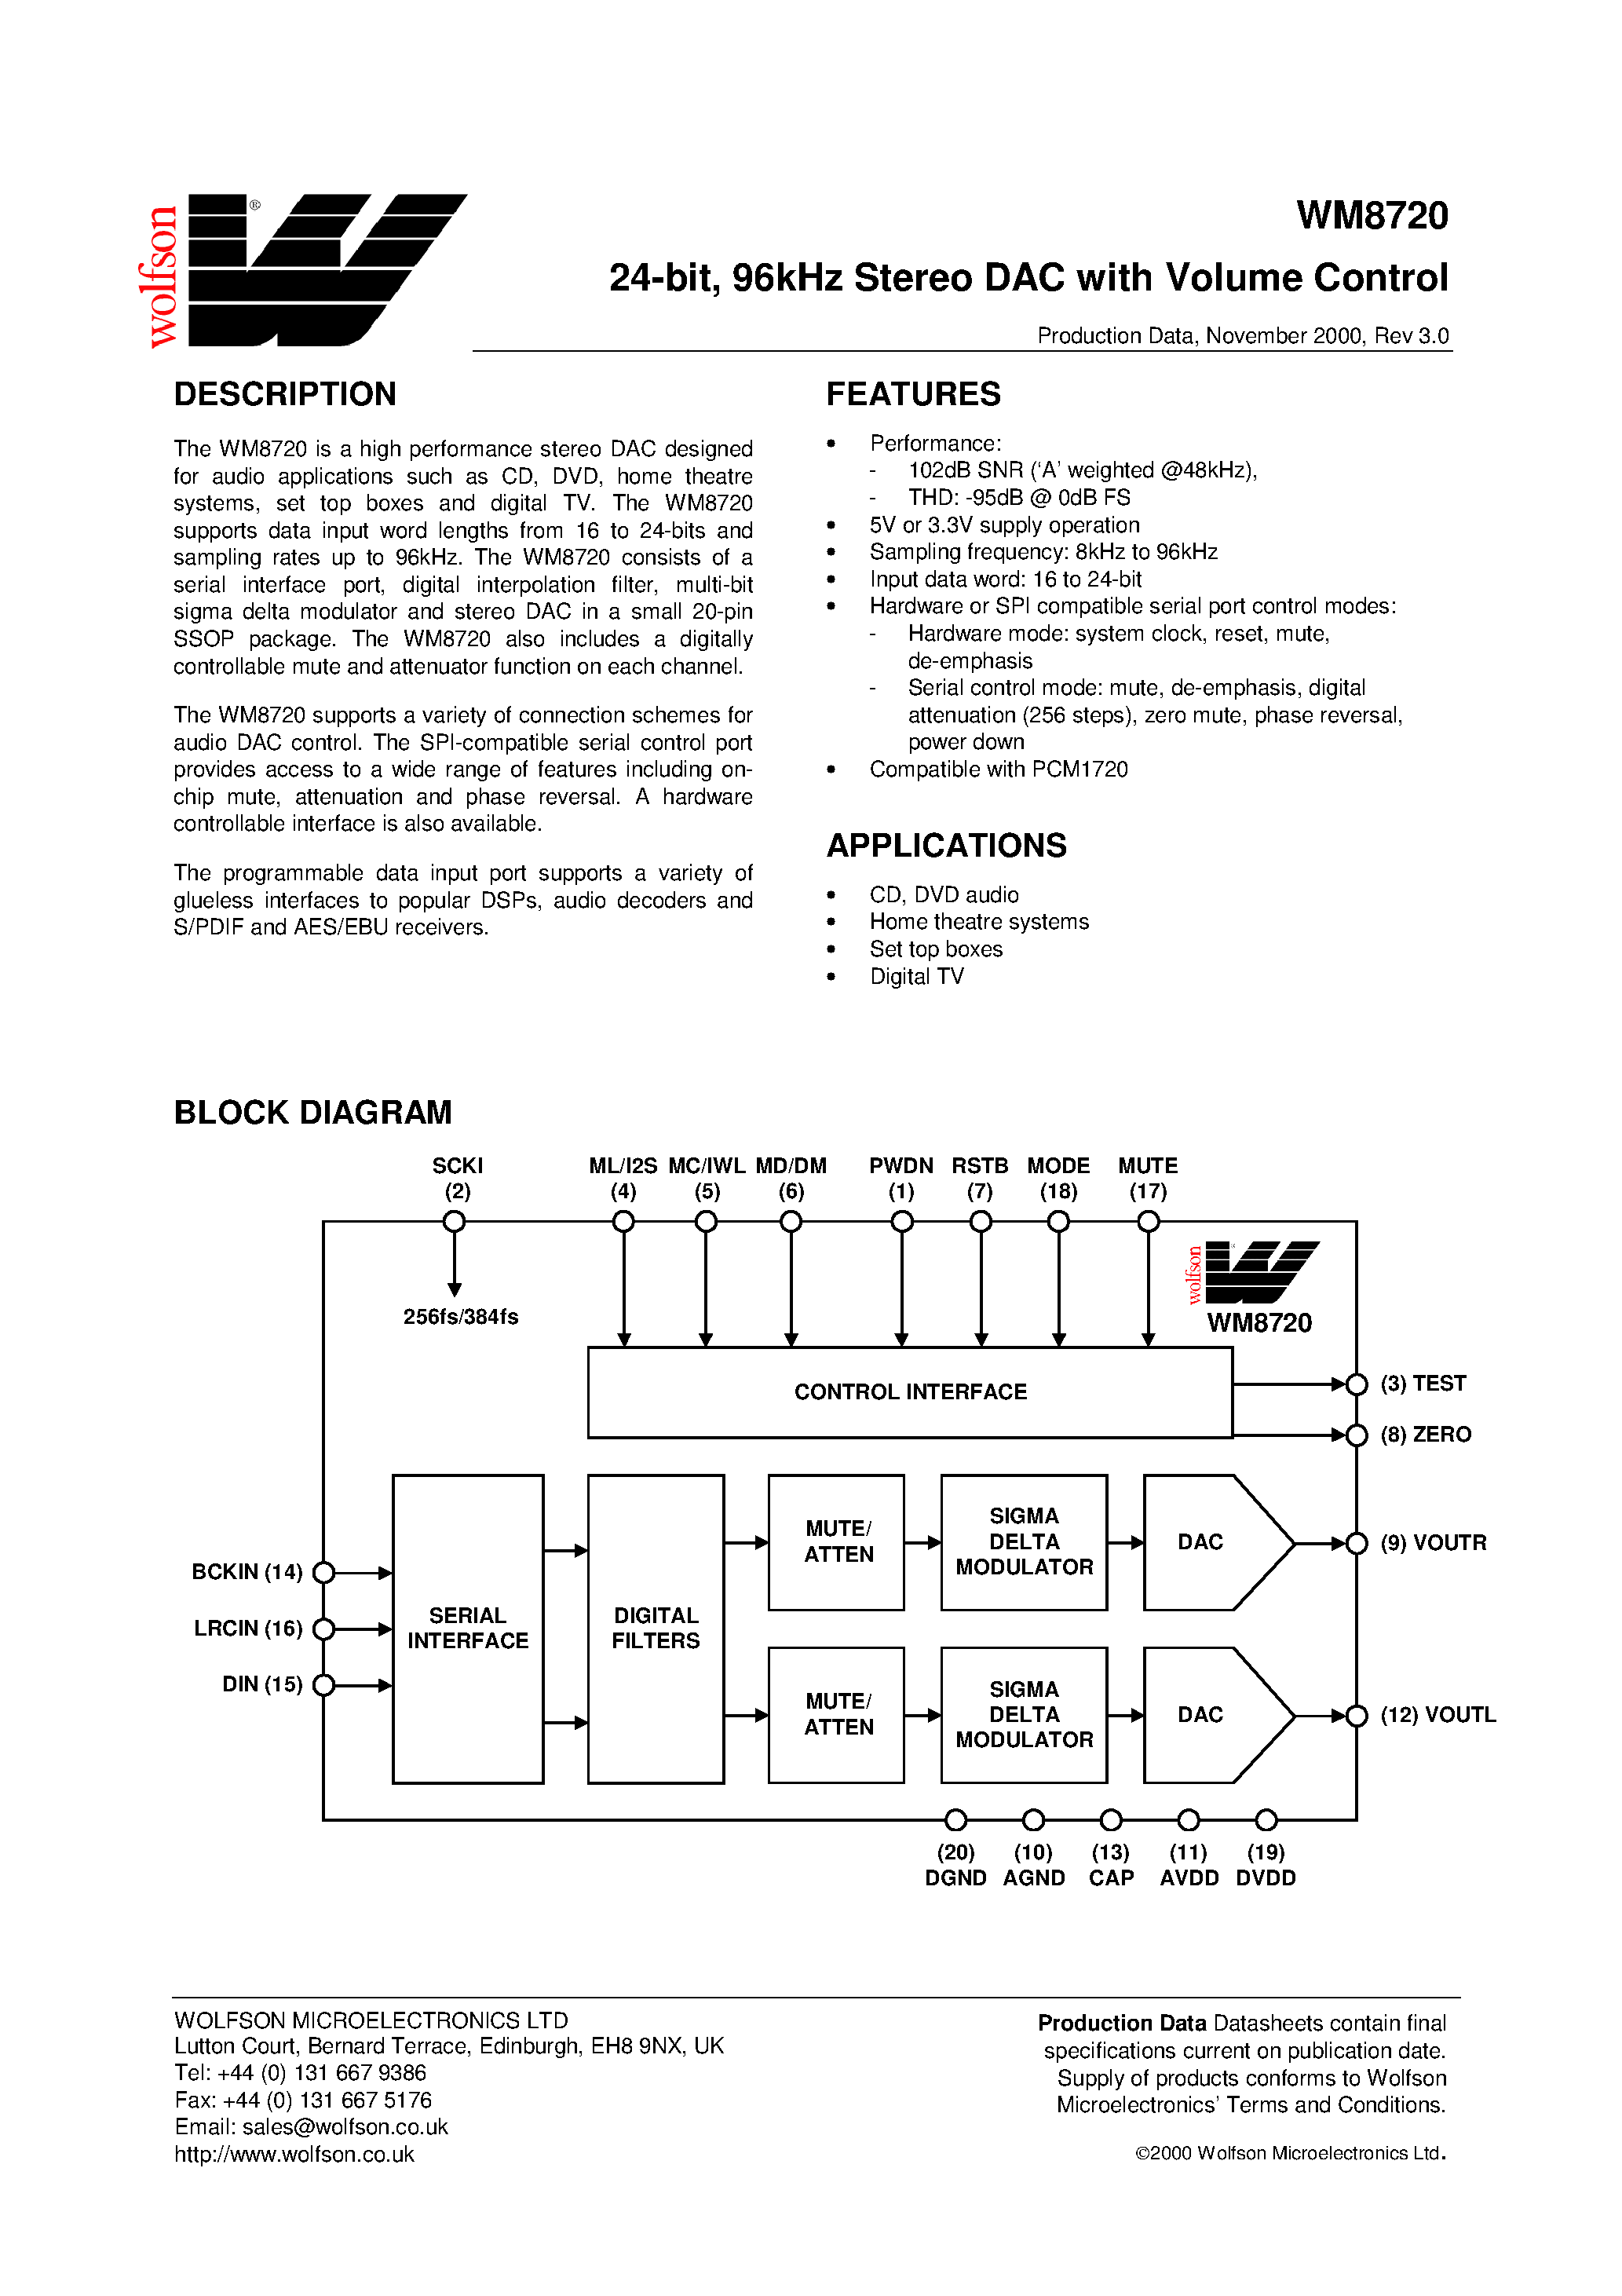 Datasheet WM8720 - 24-bit/ 96kHz Stereo DACwith Volume Control page 1